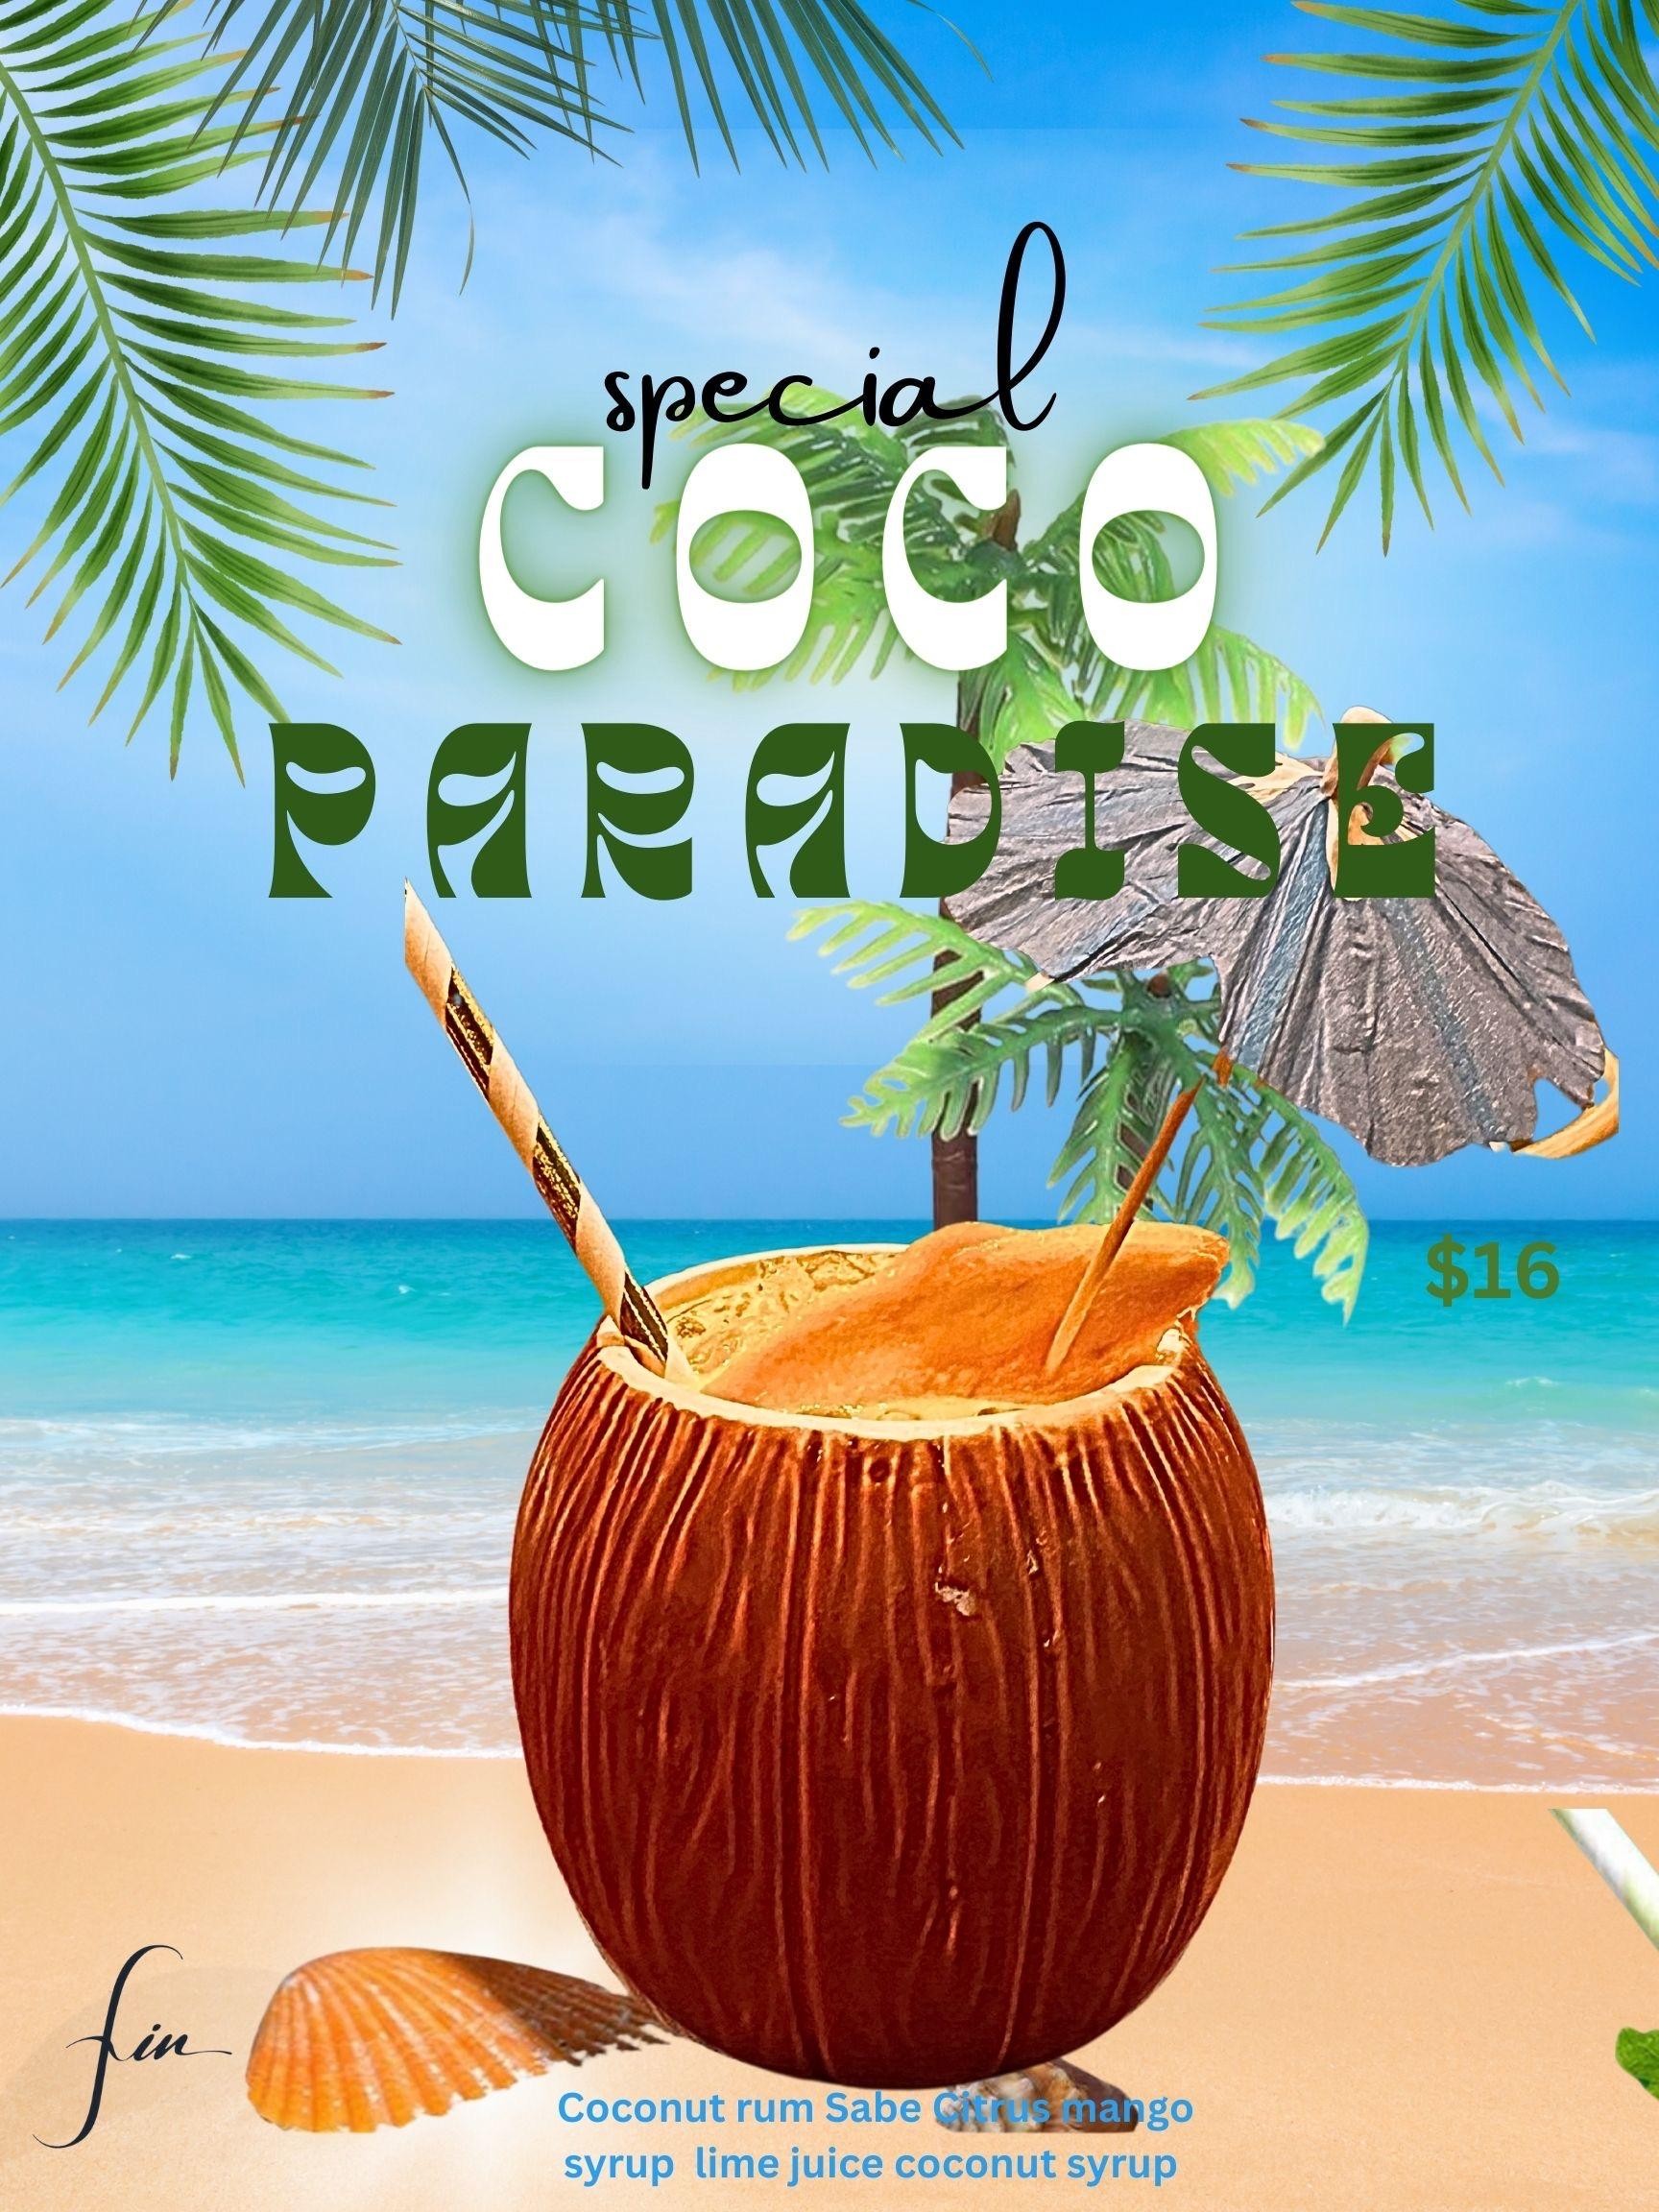 Coco paradise